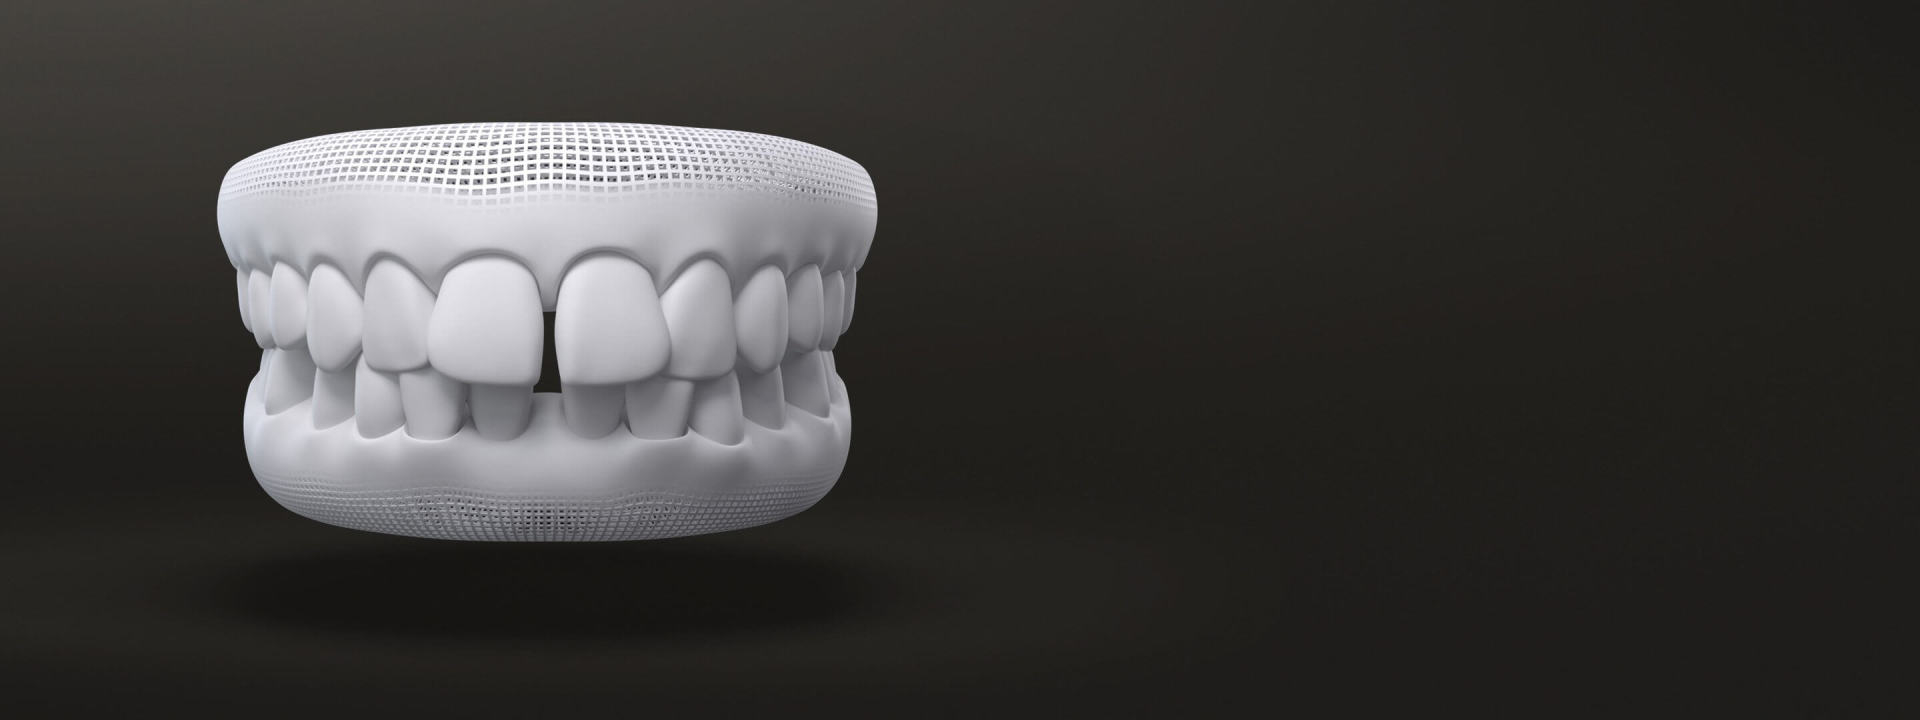 Gap teeth 3d model - Invisalign treatments - UK